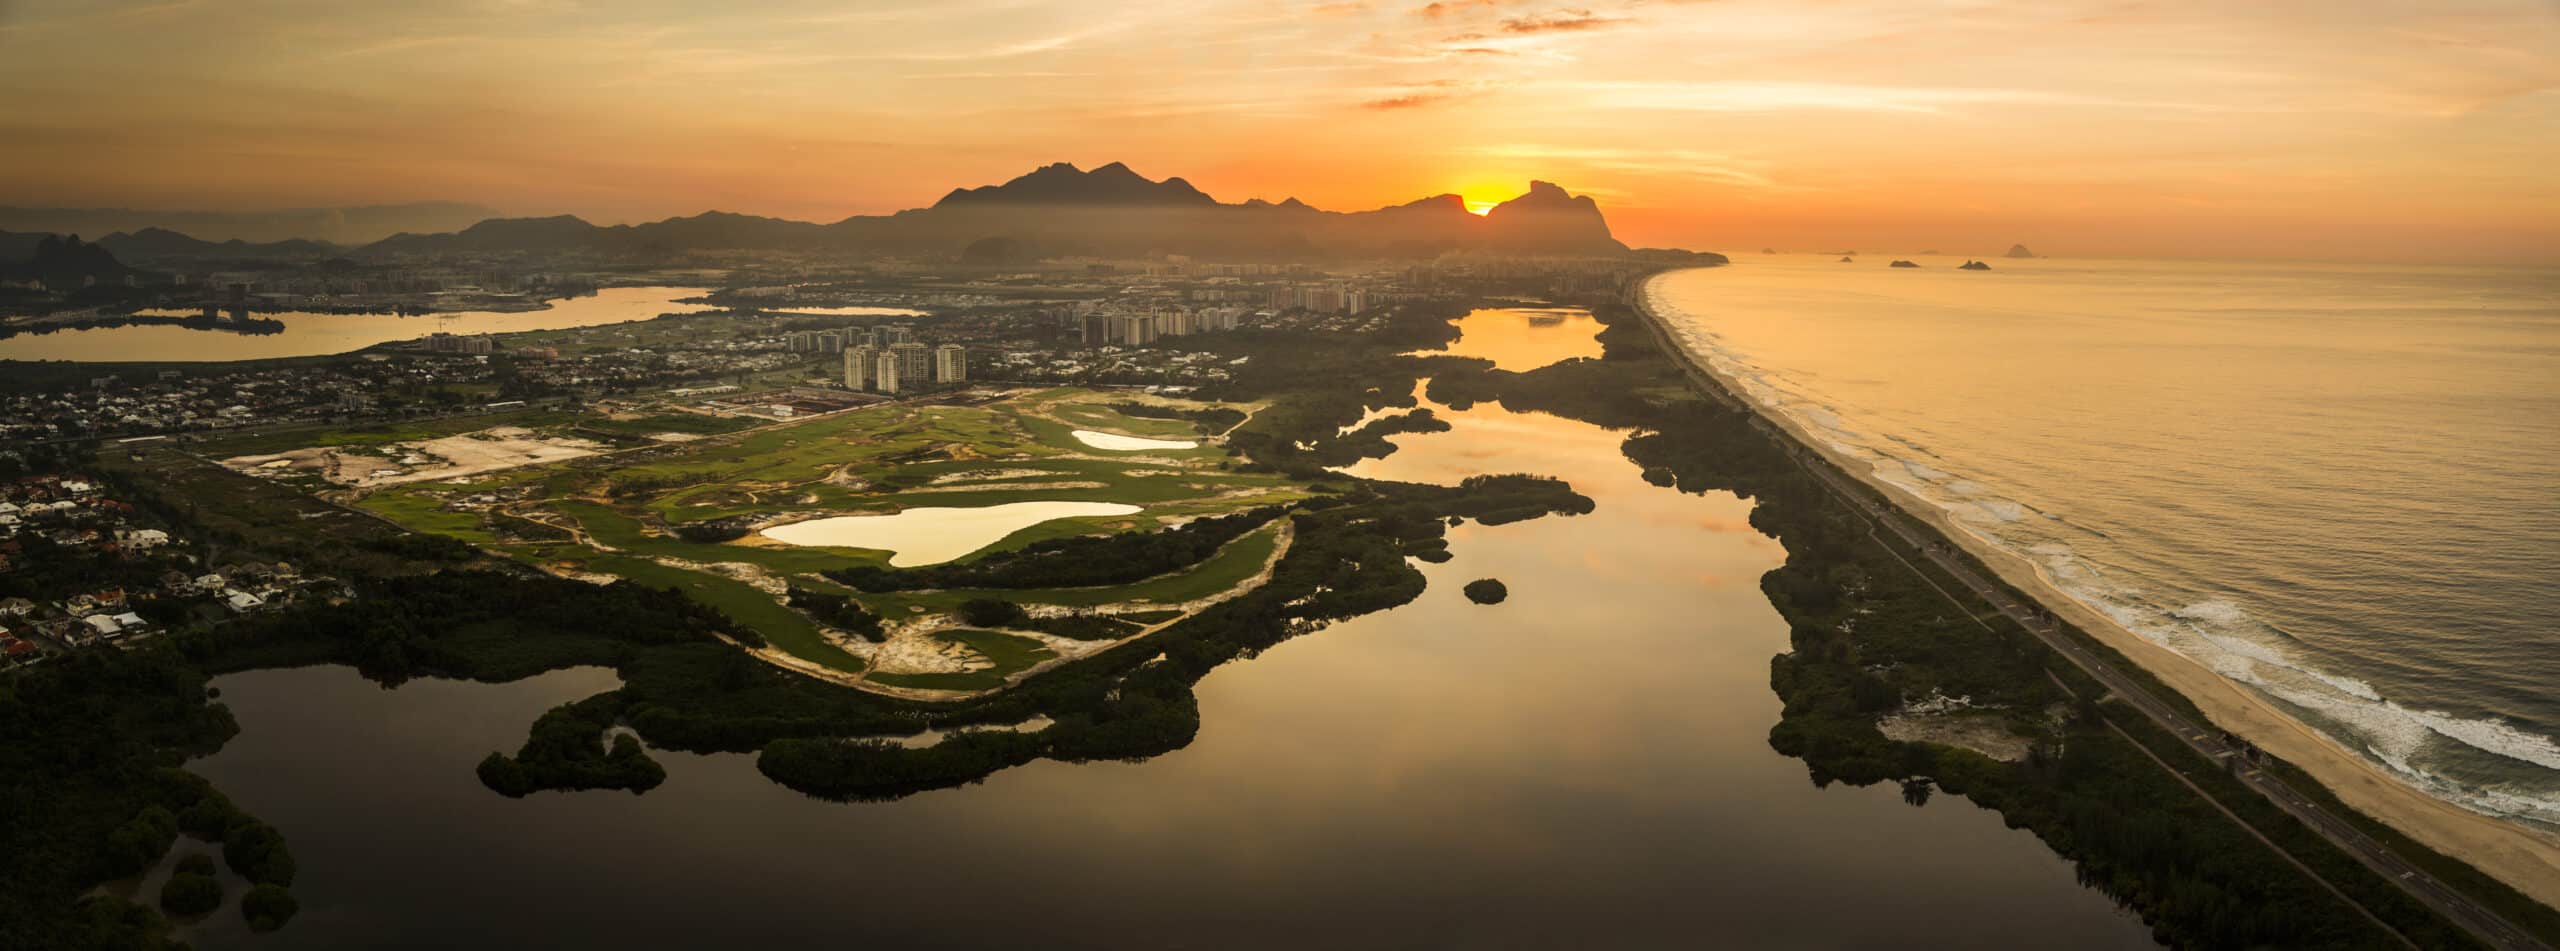 Rio terá 1° evento internacional de agro e sustentabilidade do país